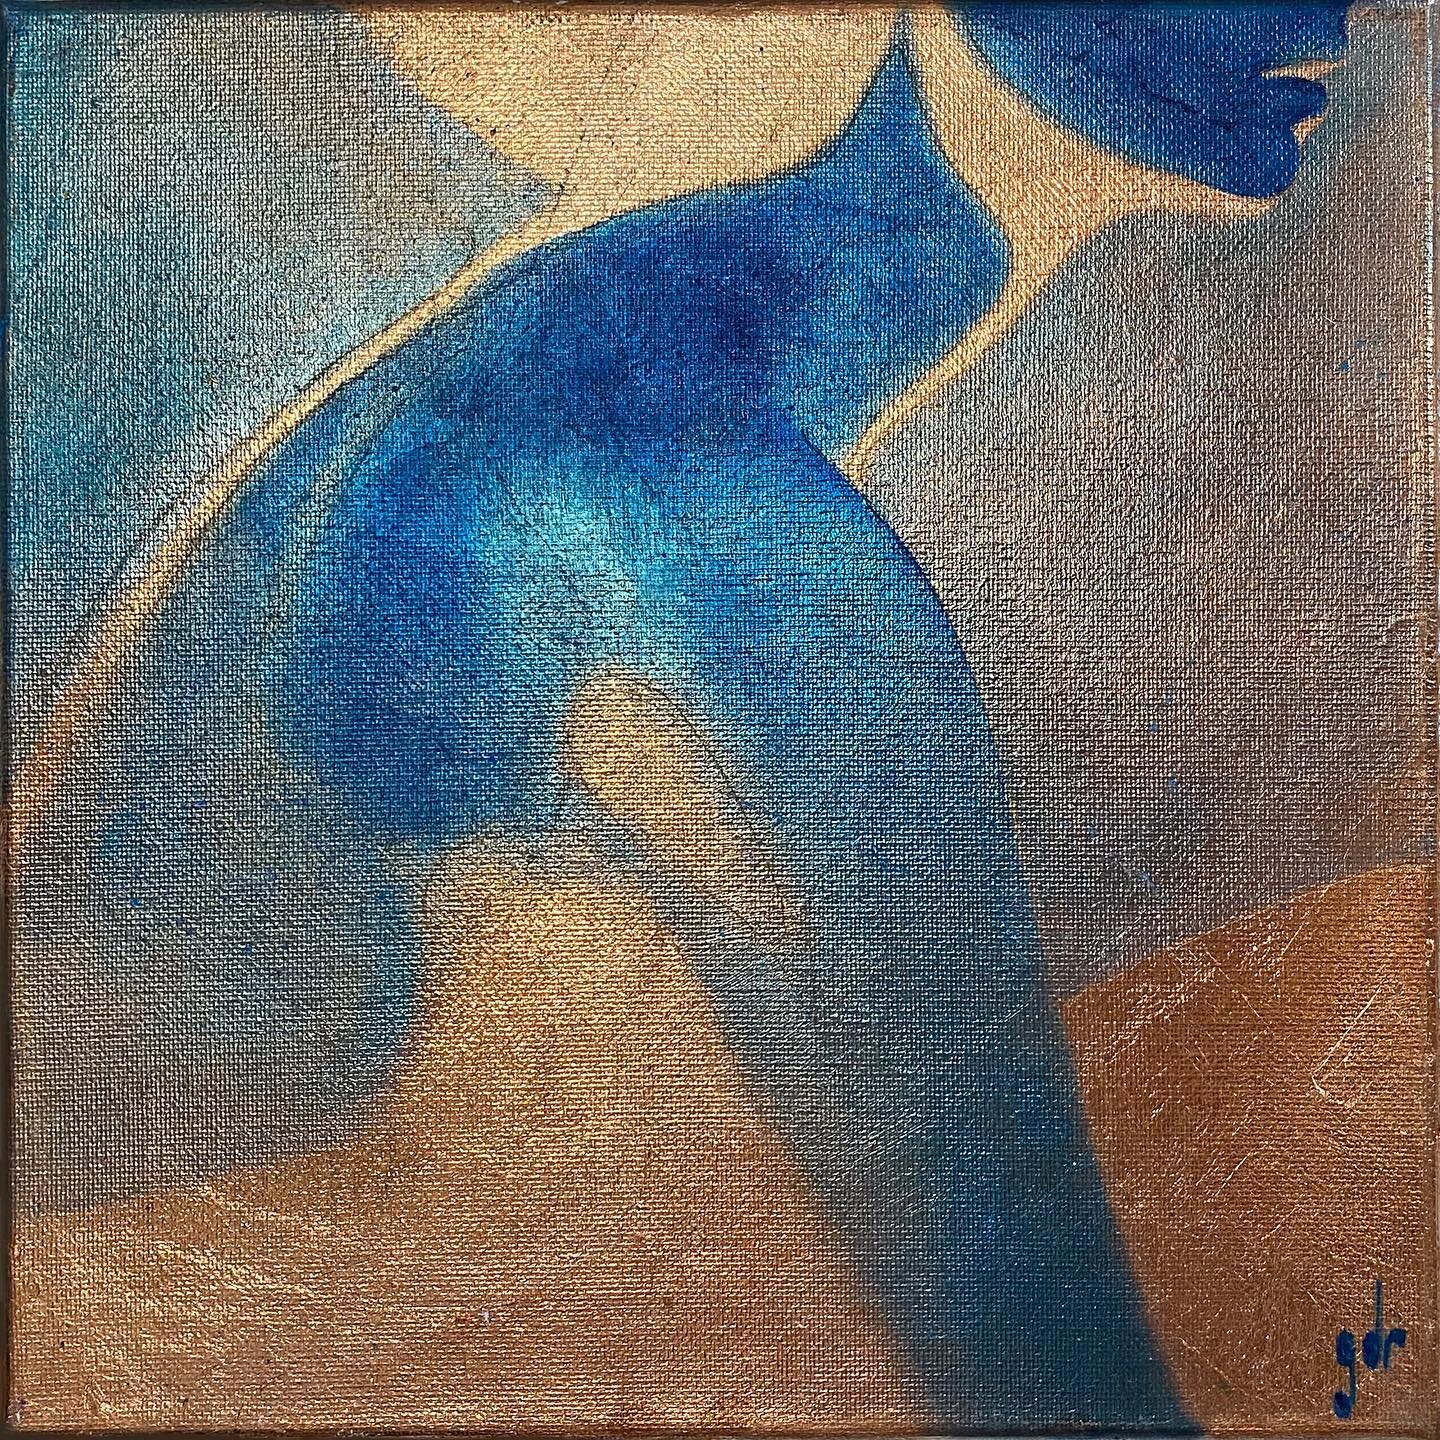 &ldquo;Her Curves&rdquo; 
Oil and copper leaf on canvas
10&rdquo;x10&rdquo;
Available on @artfinder_com 
#oilpainting #copperfoil #copperleaf #painting #blue #copper #arte #art #artistsoninstagram  #body #portrait #curves #woman #grace #beauty #elega